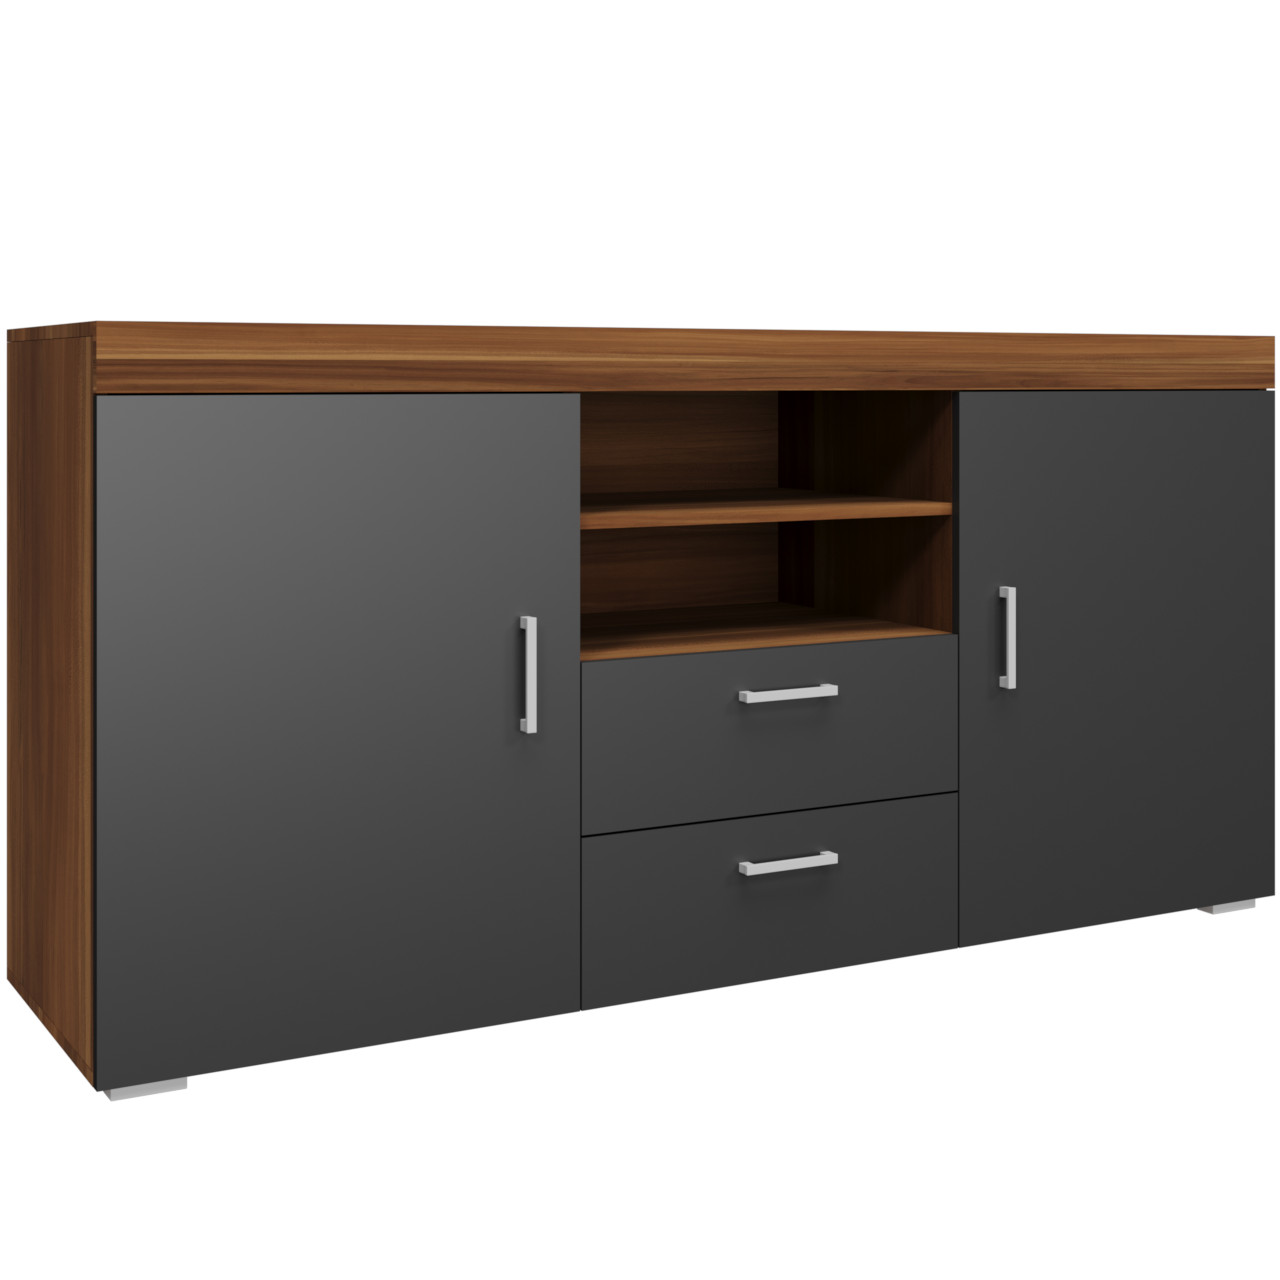 Storage cabinet SAMBA SM5 plum / graphite